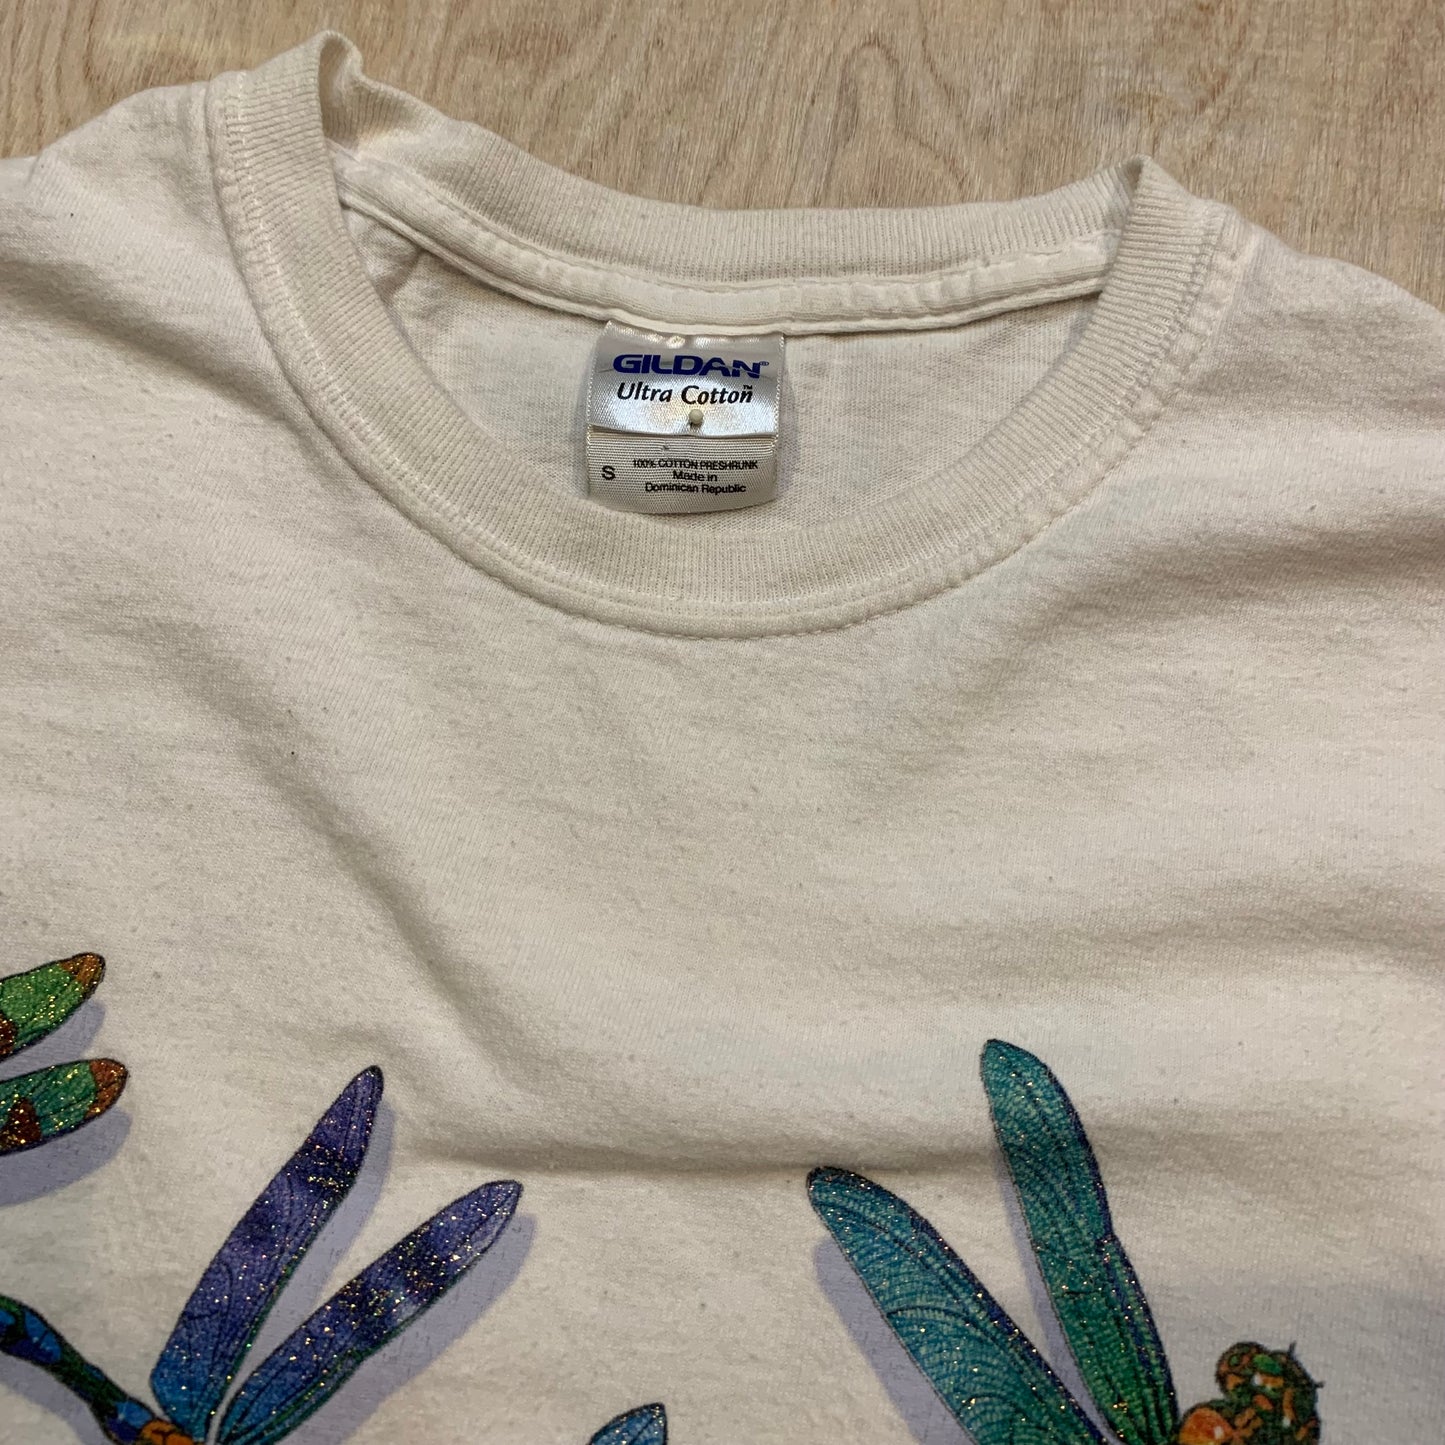 2002 Wisconsin Interstate Park Dragonfly T-Shirt